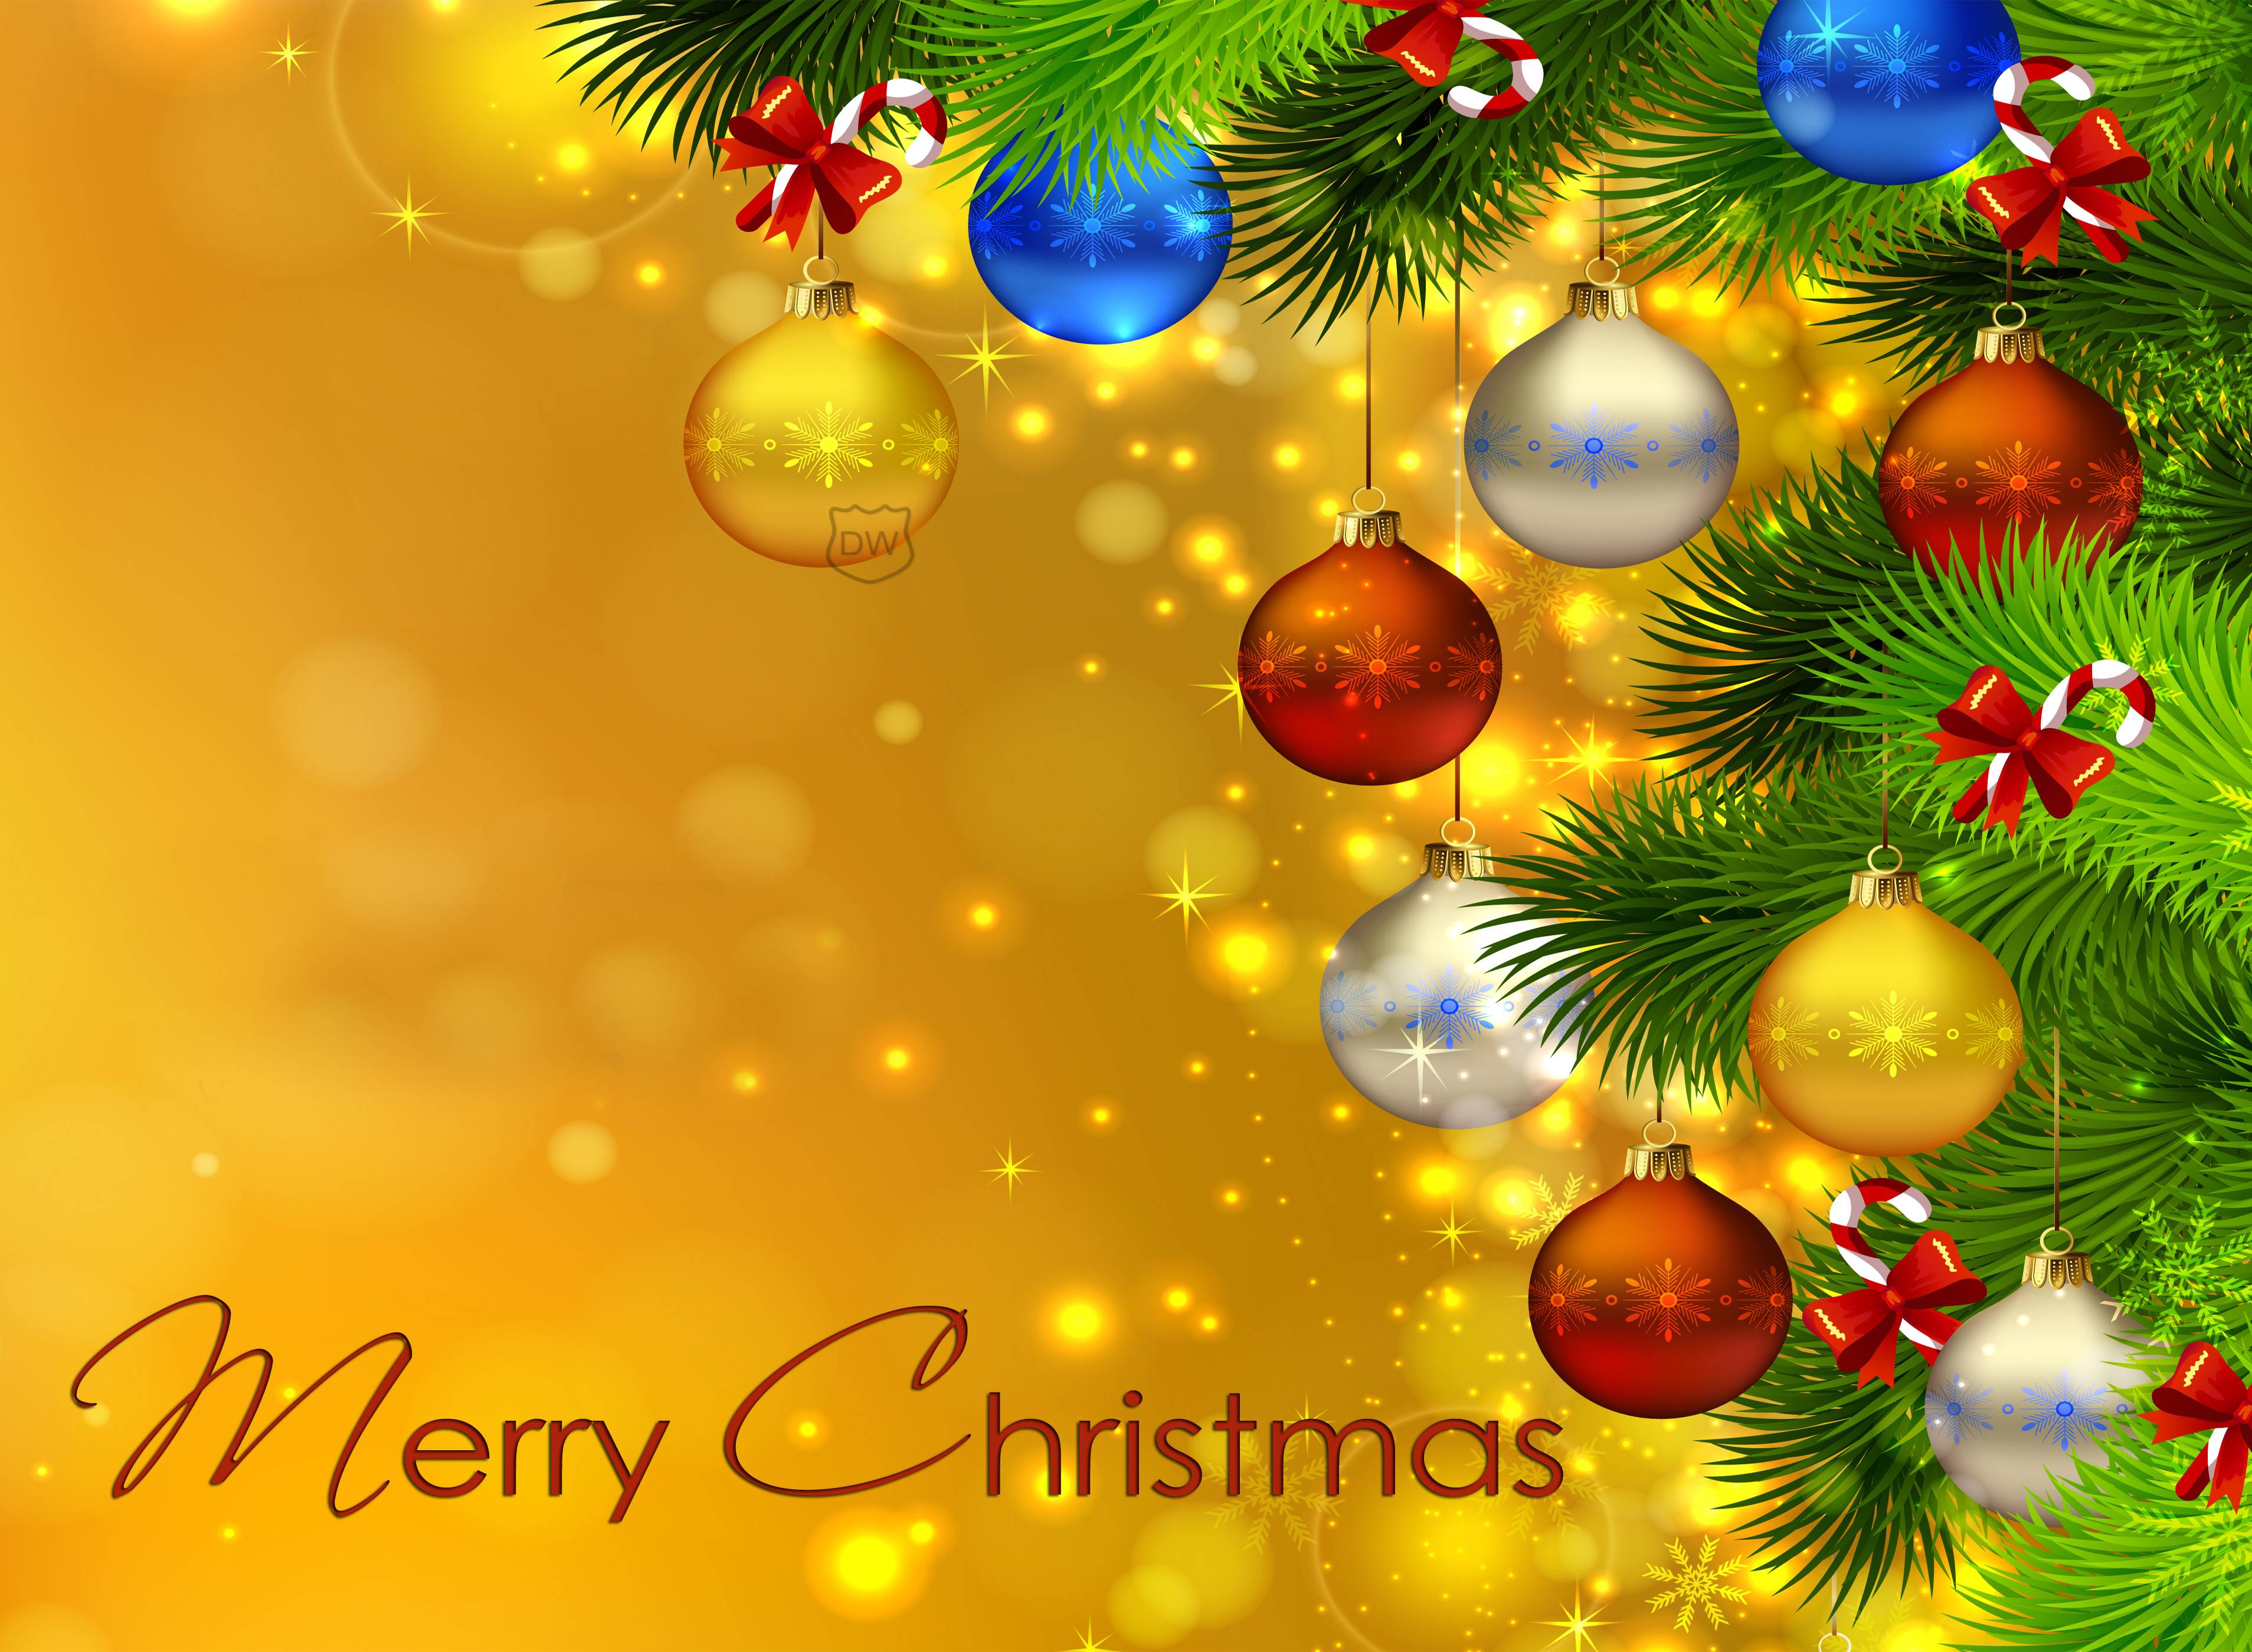 Merry Christmas Wallpapers HD free download - PixelsTalk.Net